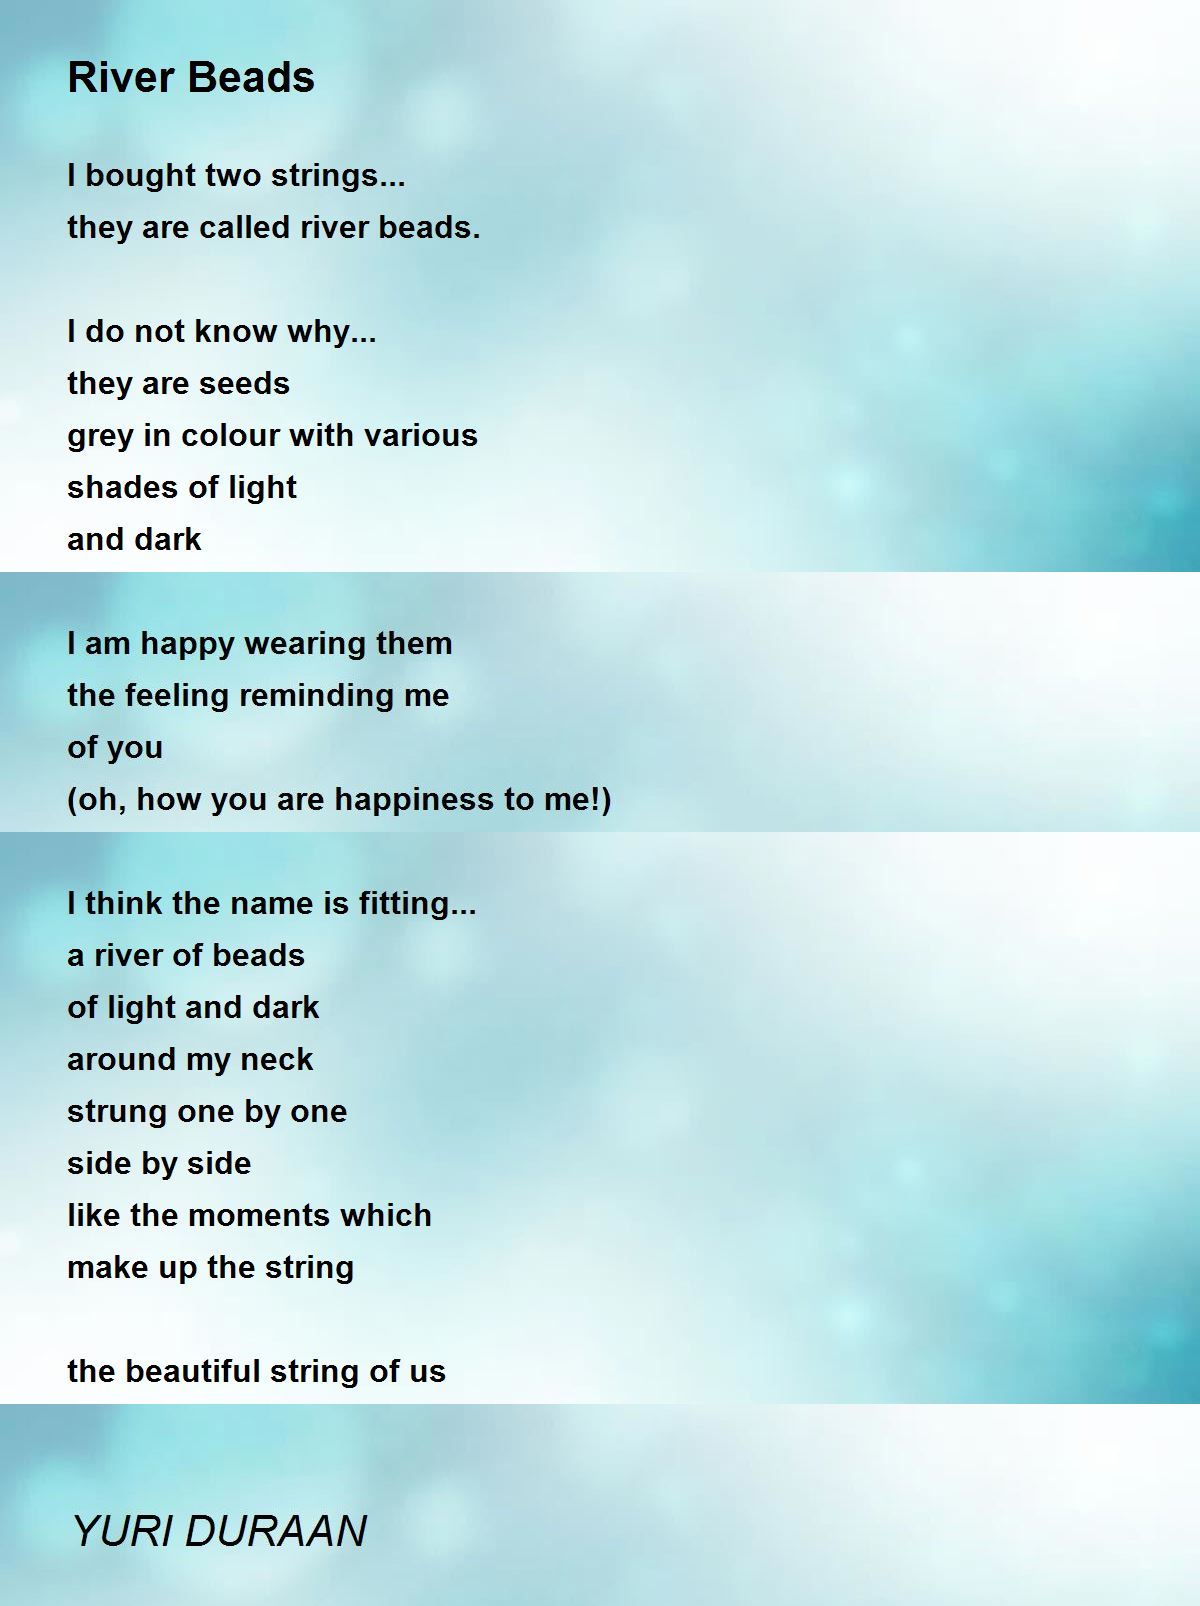 River Beads - River Beads Poem by YURI DURAAN